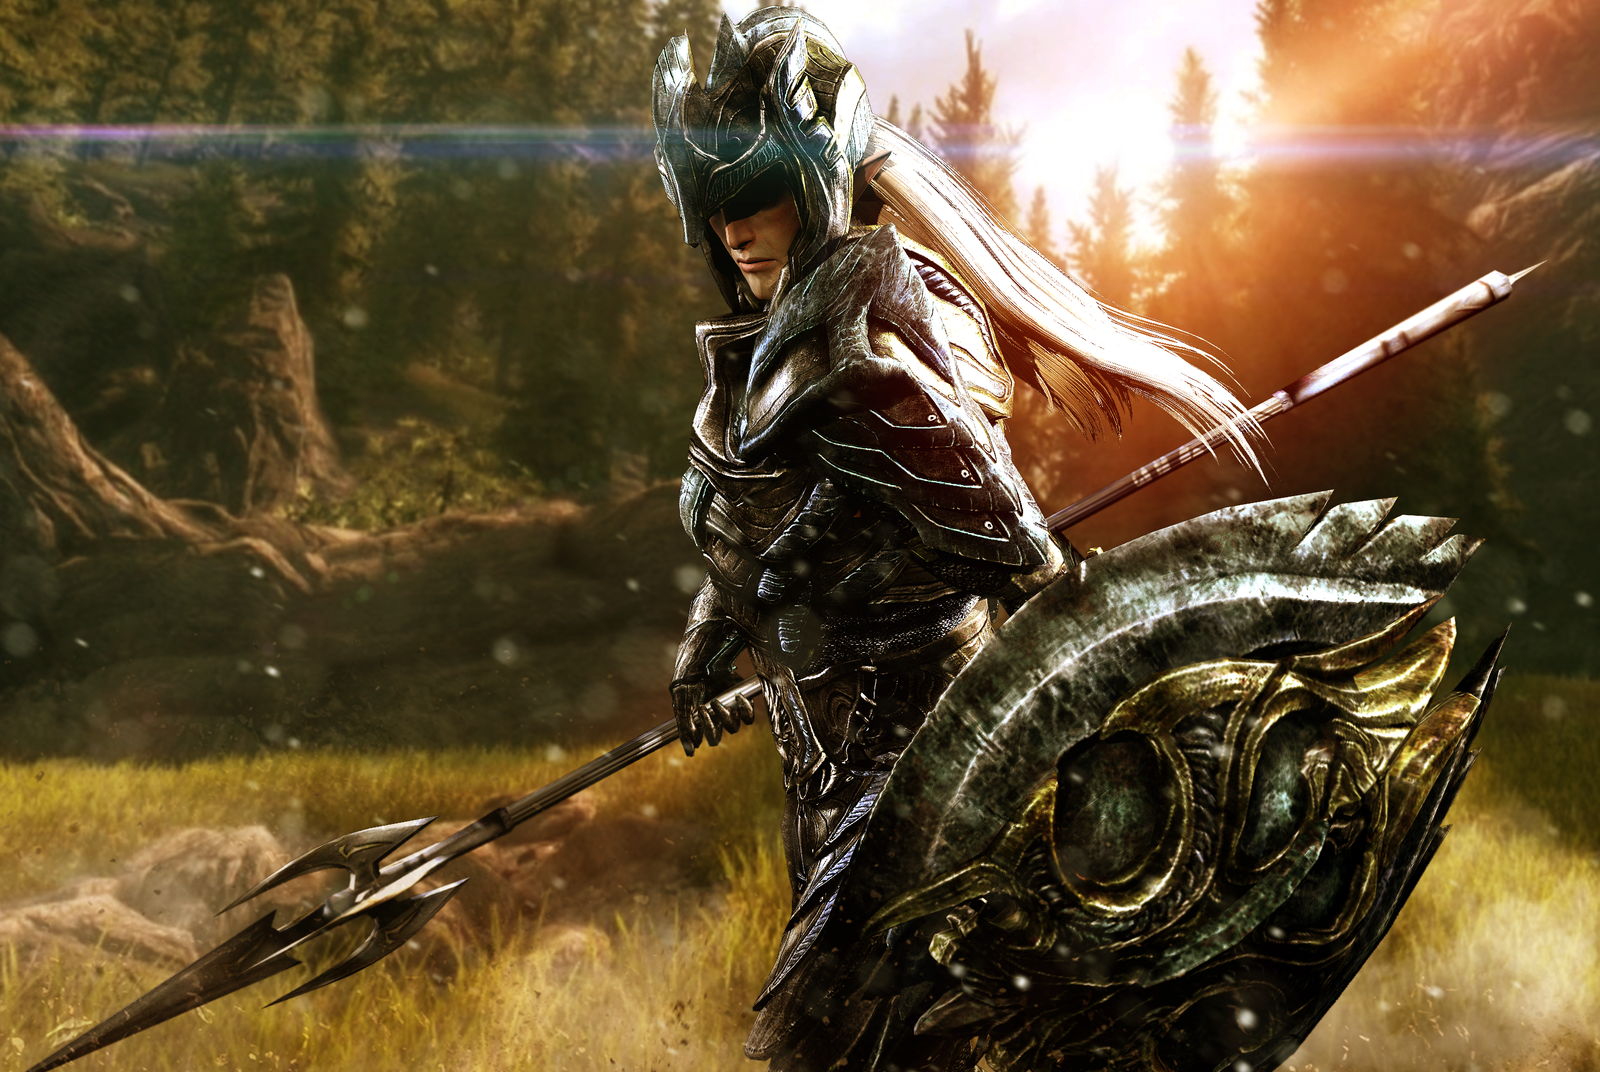 General 1600x1072 The Elder Scrolls V: Skyrim ENB video games elves RPG PC gaming fantasy armor spear shield video game art fantasy art long hair armor